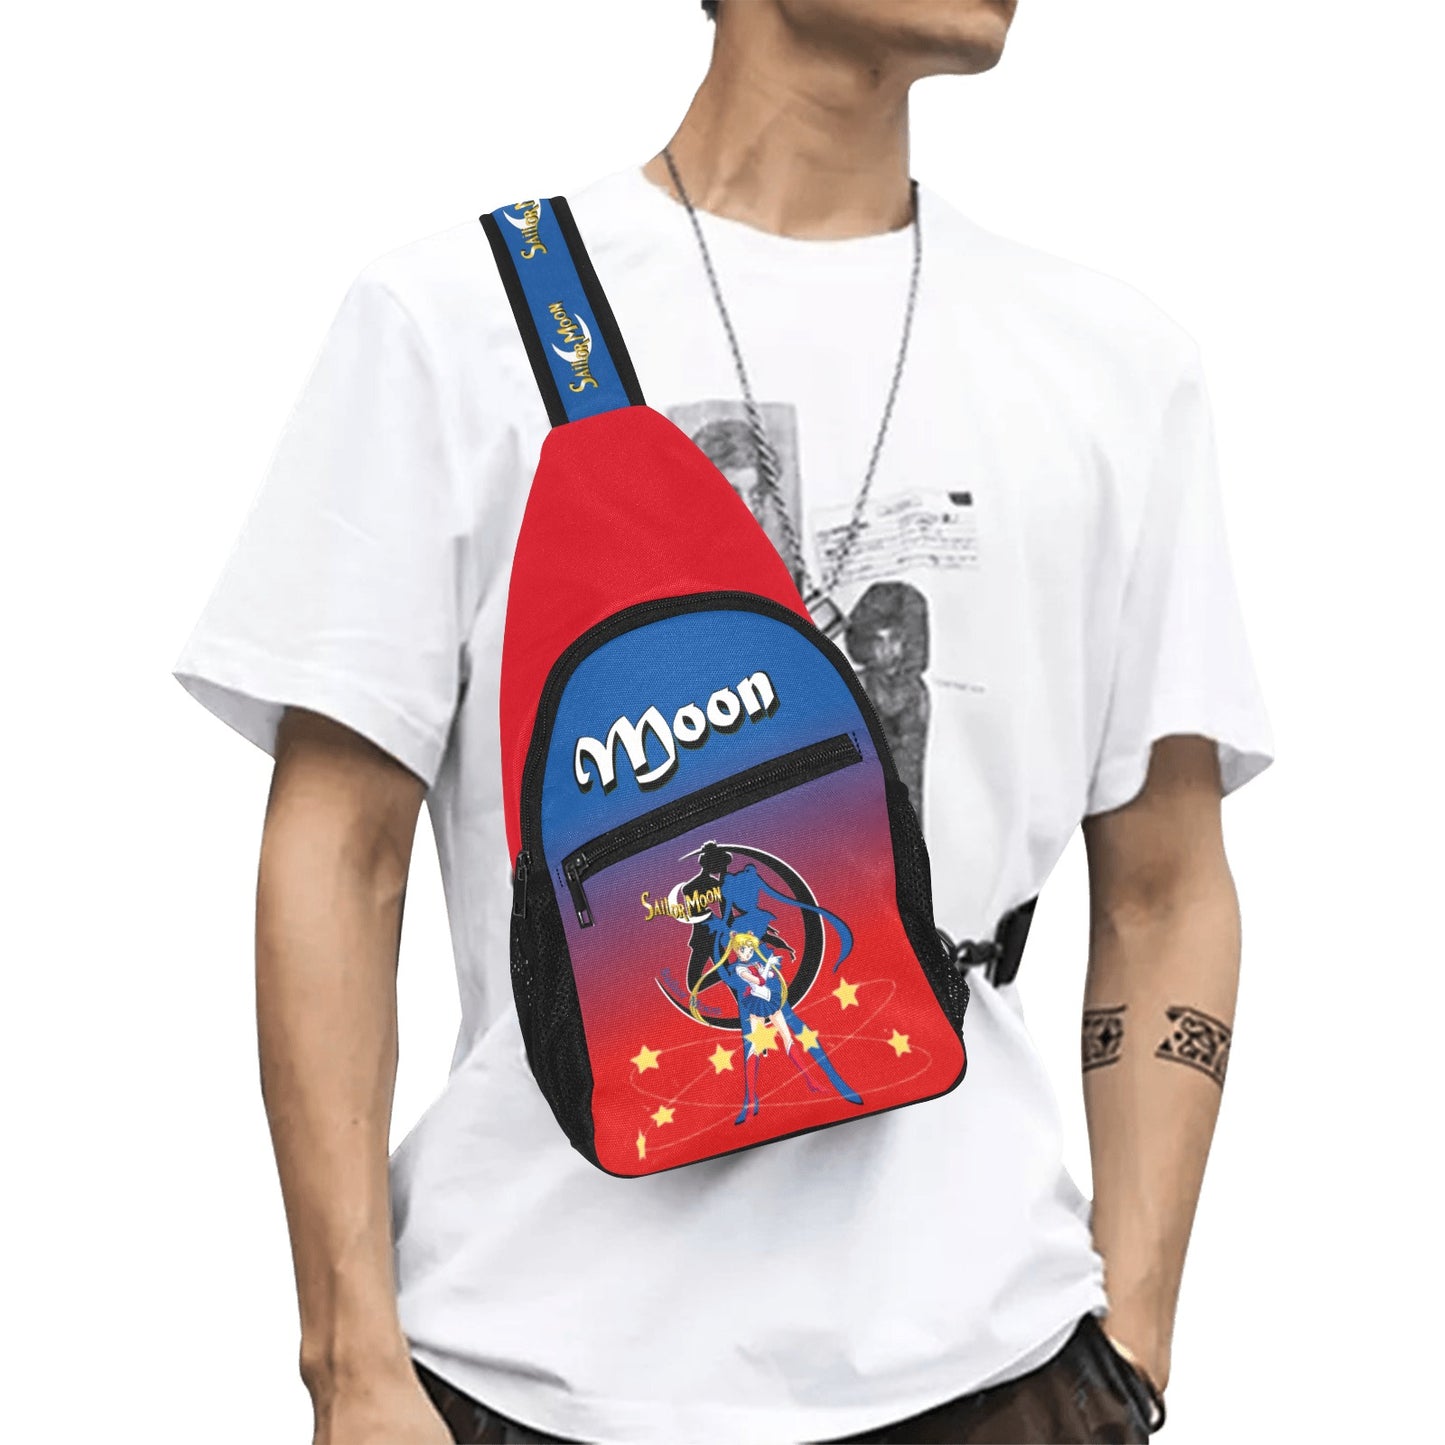 Sailor Moon Crossbody Bag